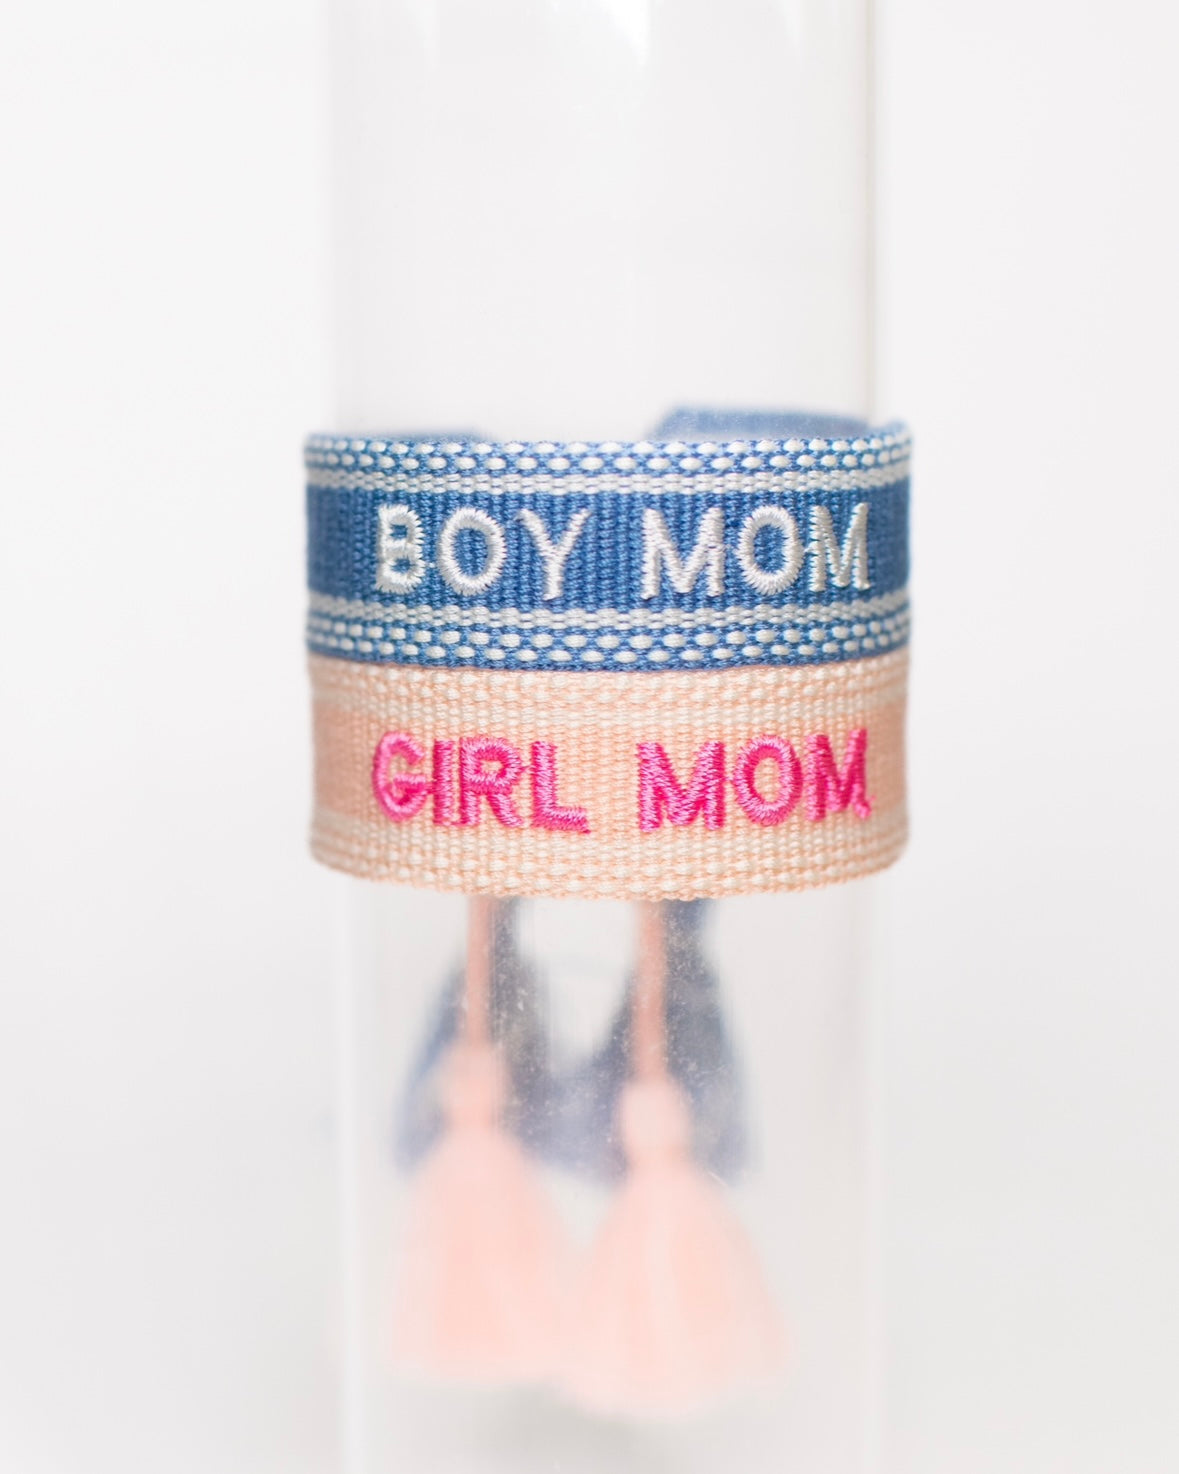 Boy Mom Bracelet